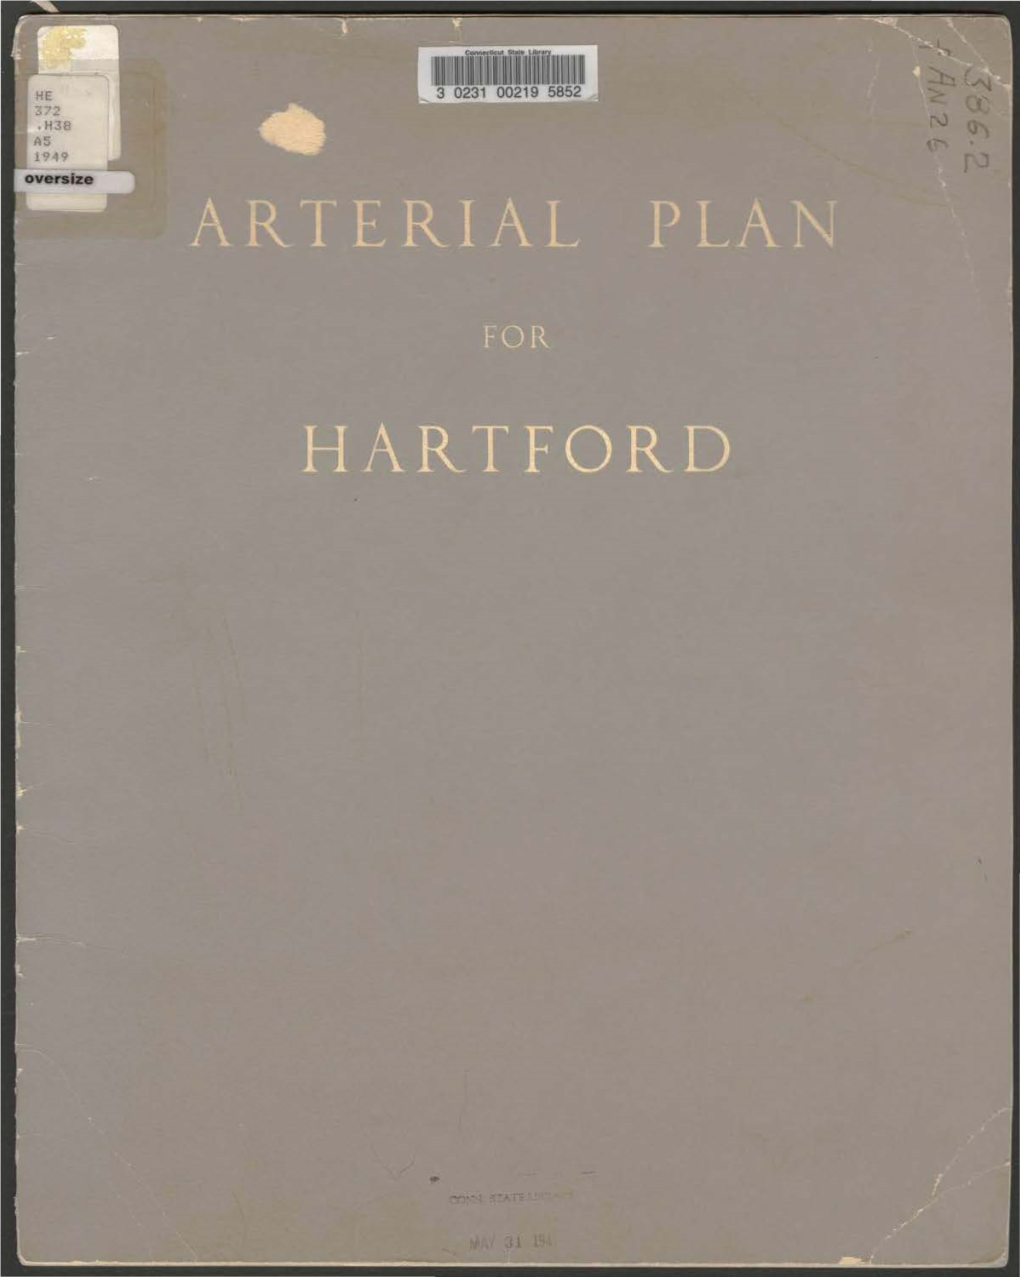 Arterial Plan for Hartford